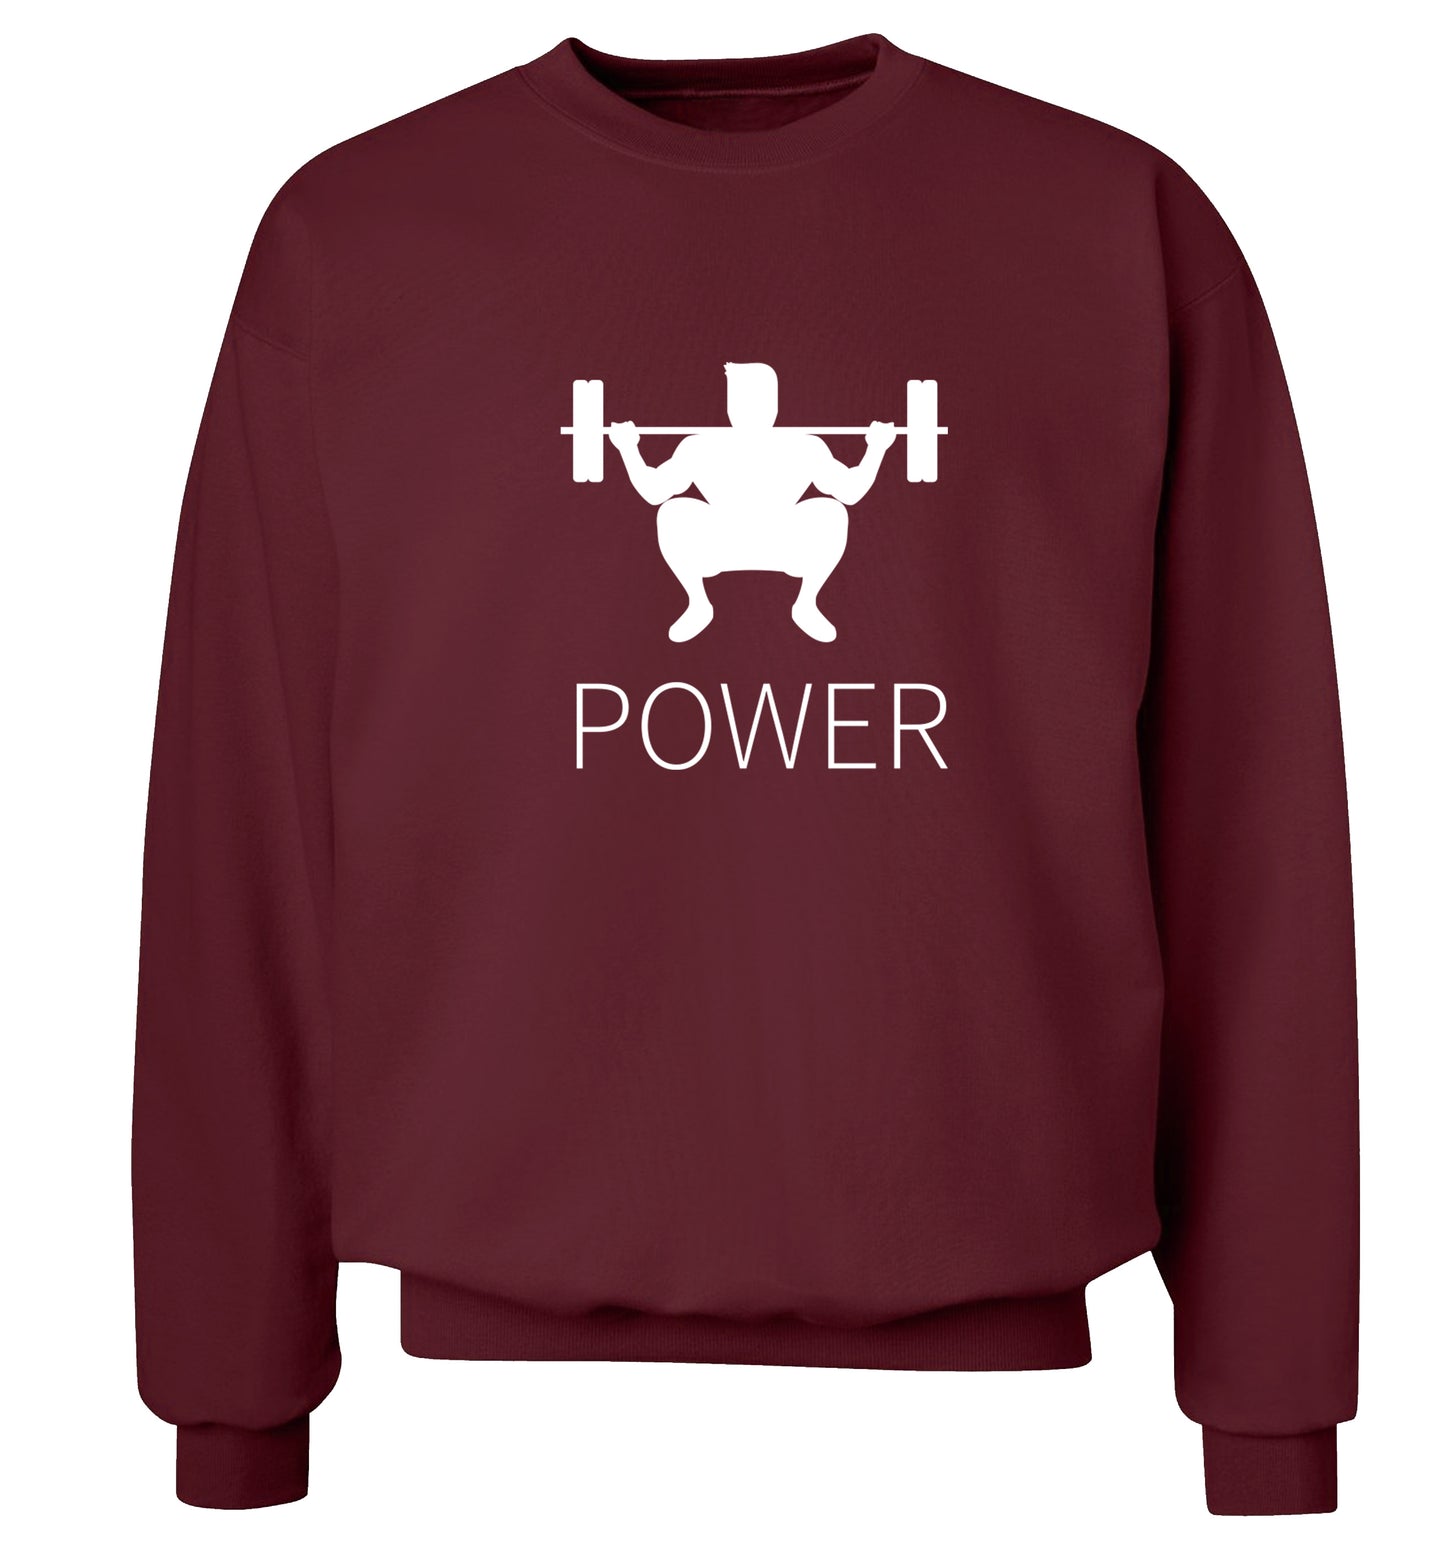 Lift power Adult's unisex maroon Sweater 2XL